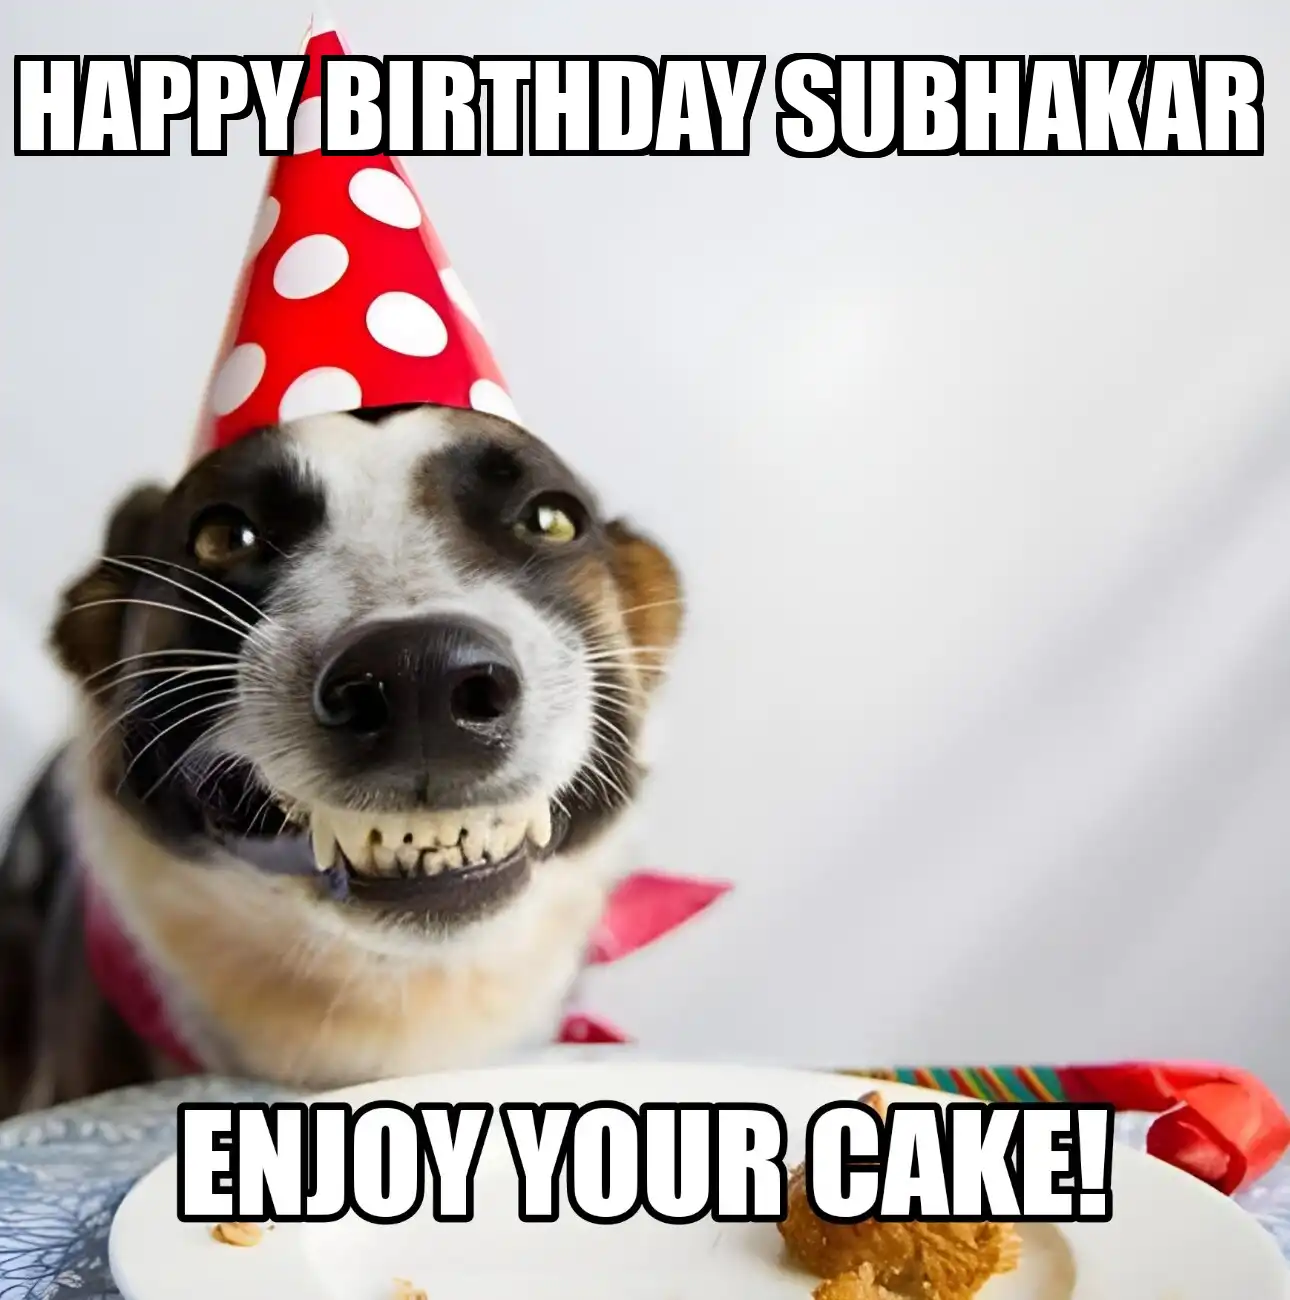 Happy Birthday Subhakar Enjoy Your Cake Dog Meme